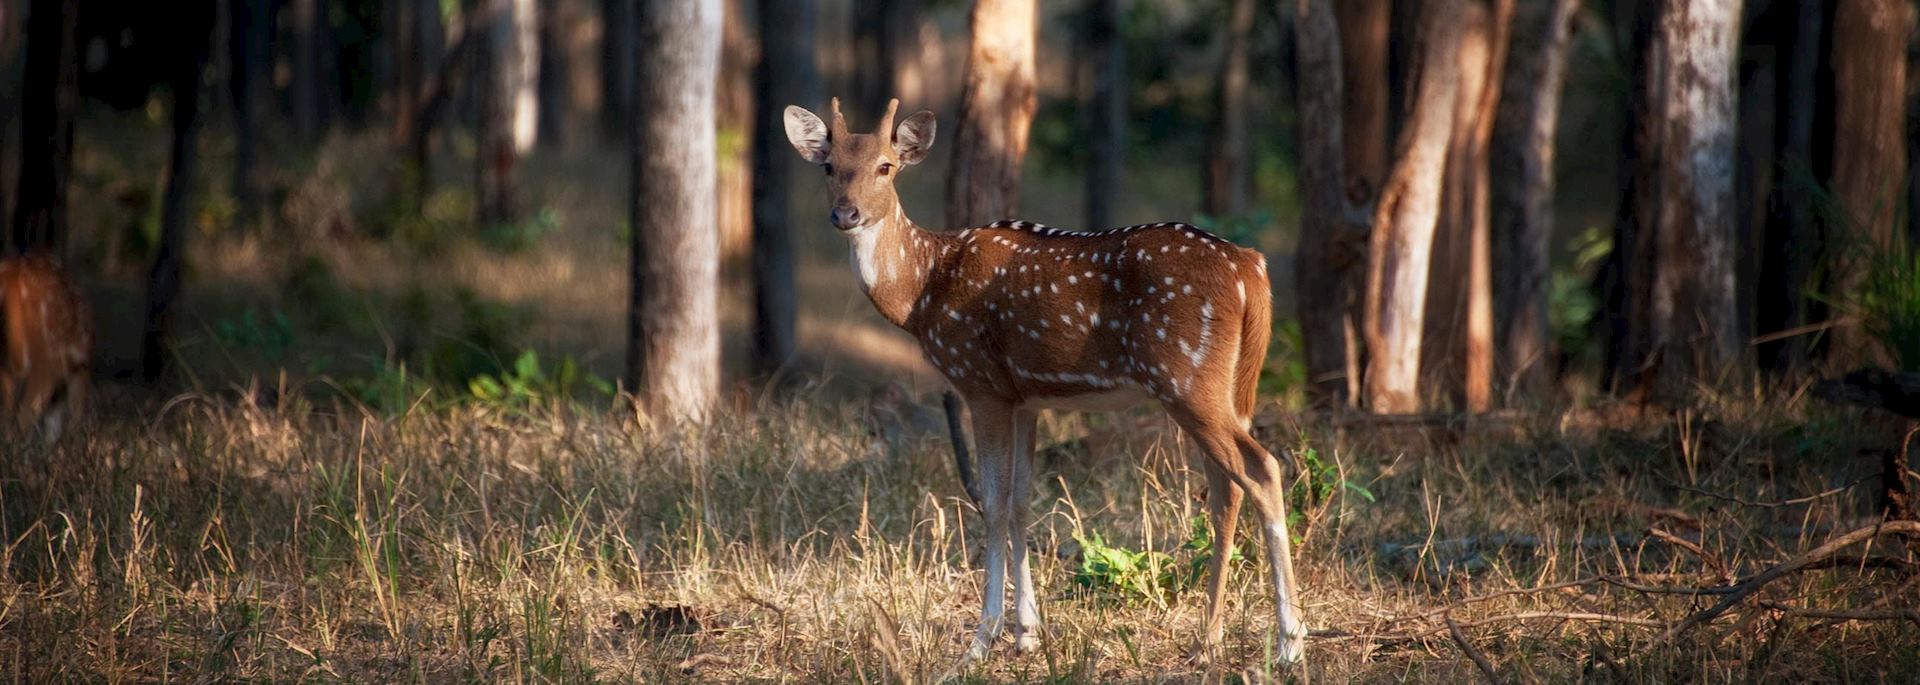 Deer in Panna National Park